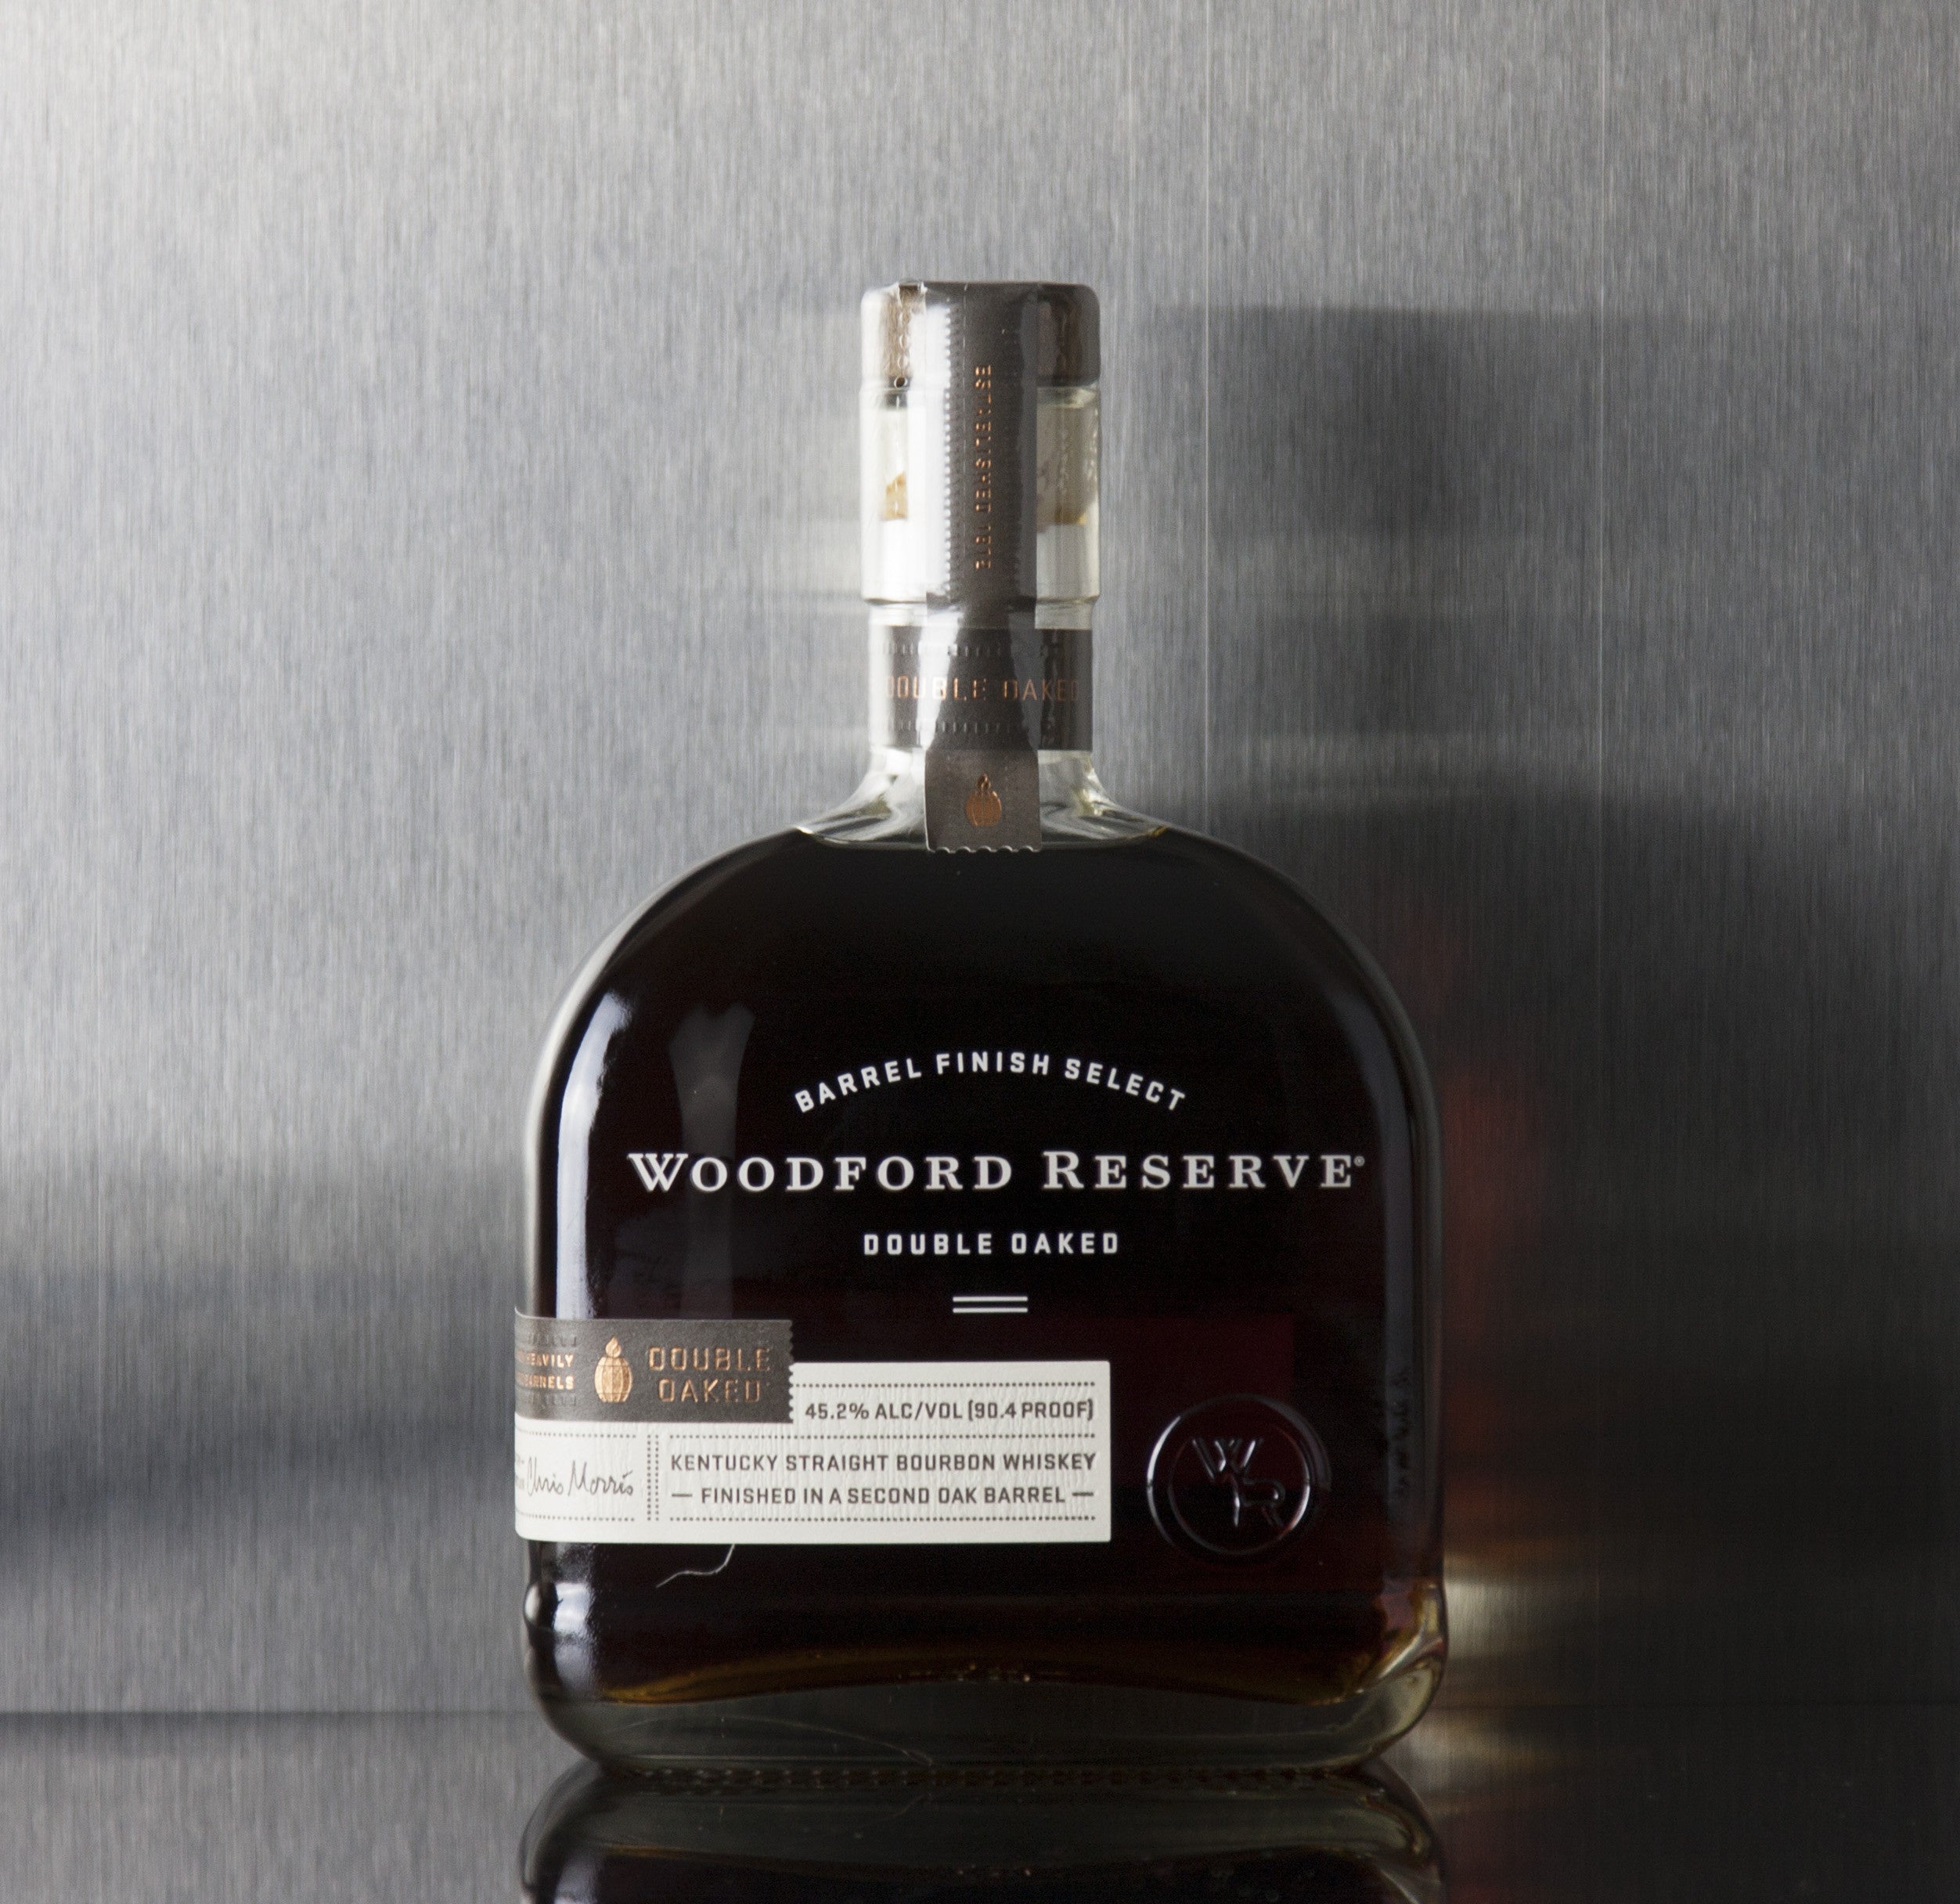 Woodford Reserve Barrel Finish Select Double Oak 750 ml